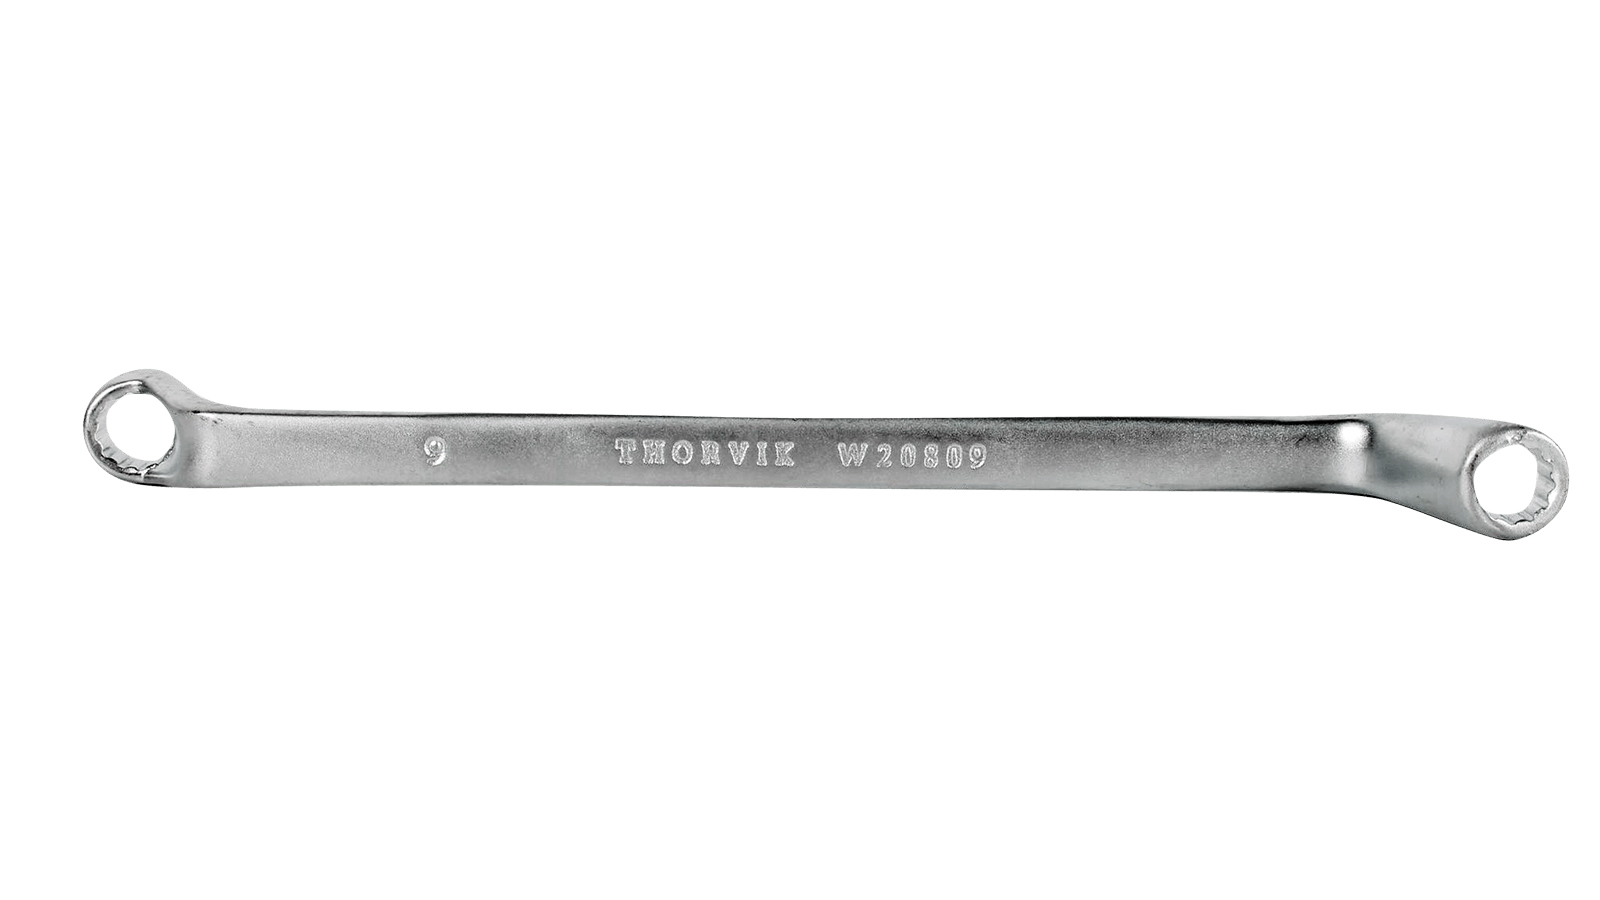 Ключ Накидной  8 Х 9 Thorvik Серии Arc THORVIK арт. W20809 имбусовый ключ thorvik hex 3 мм